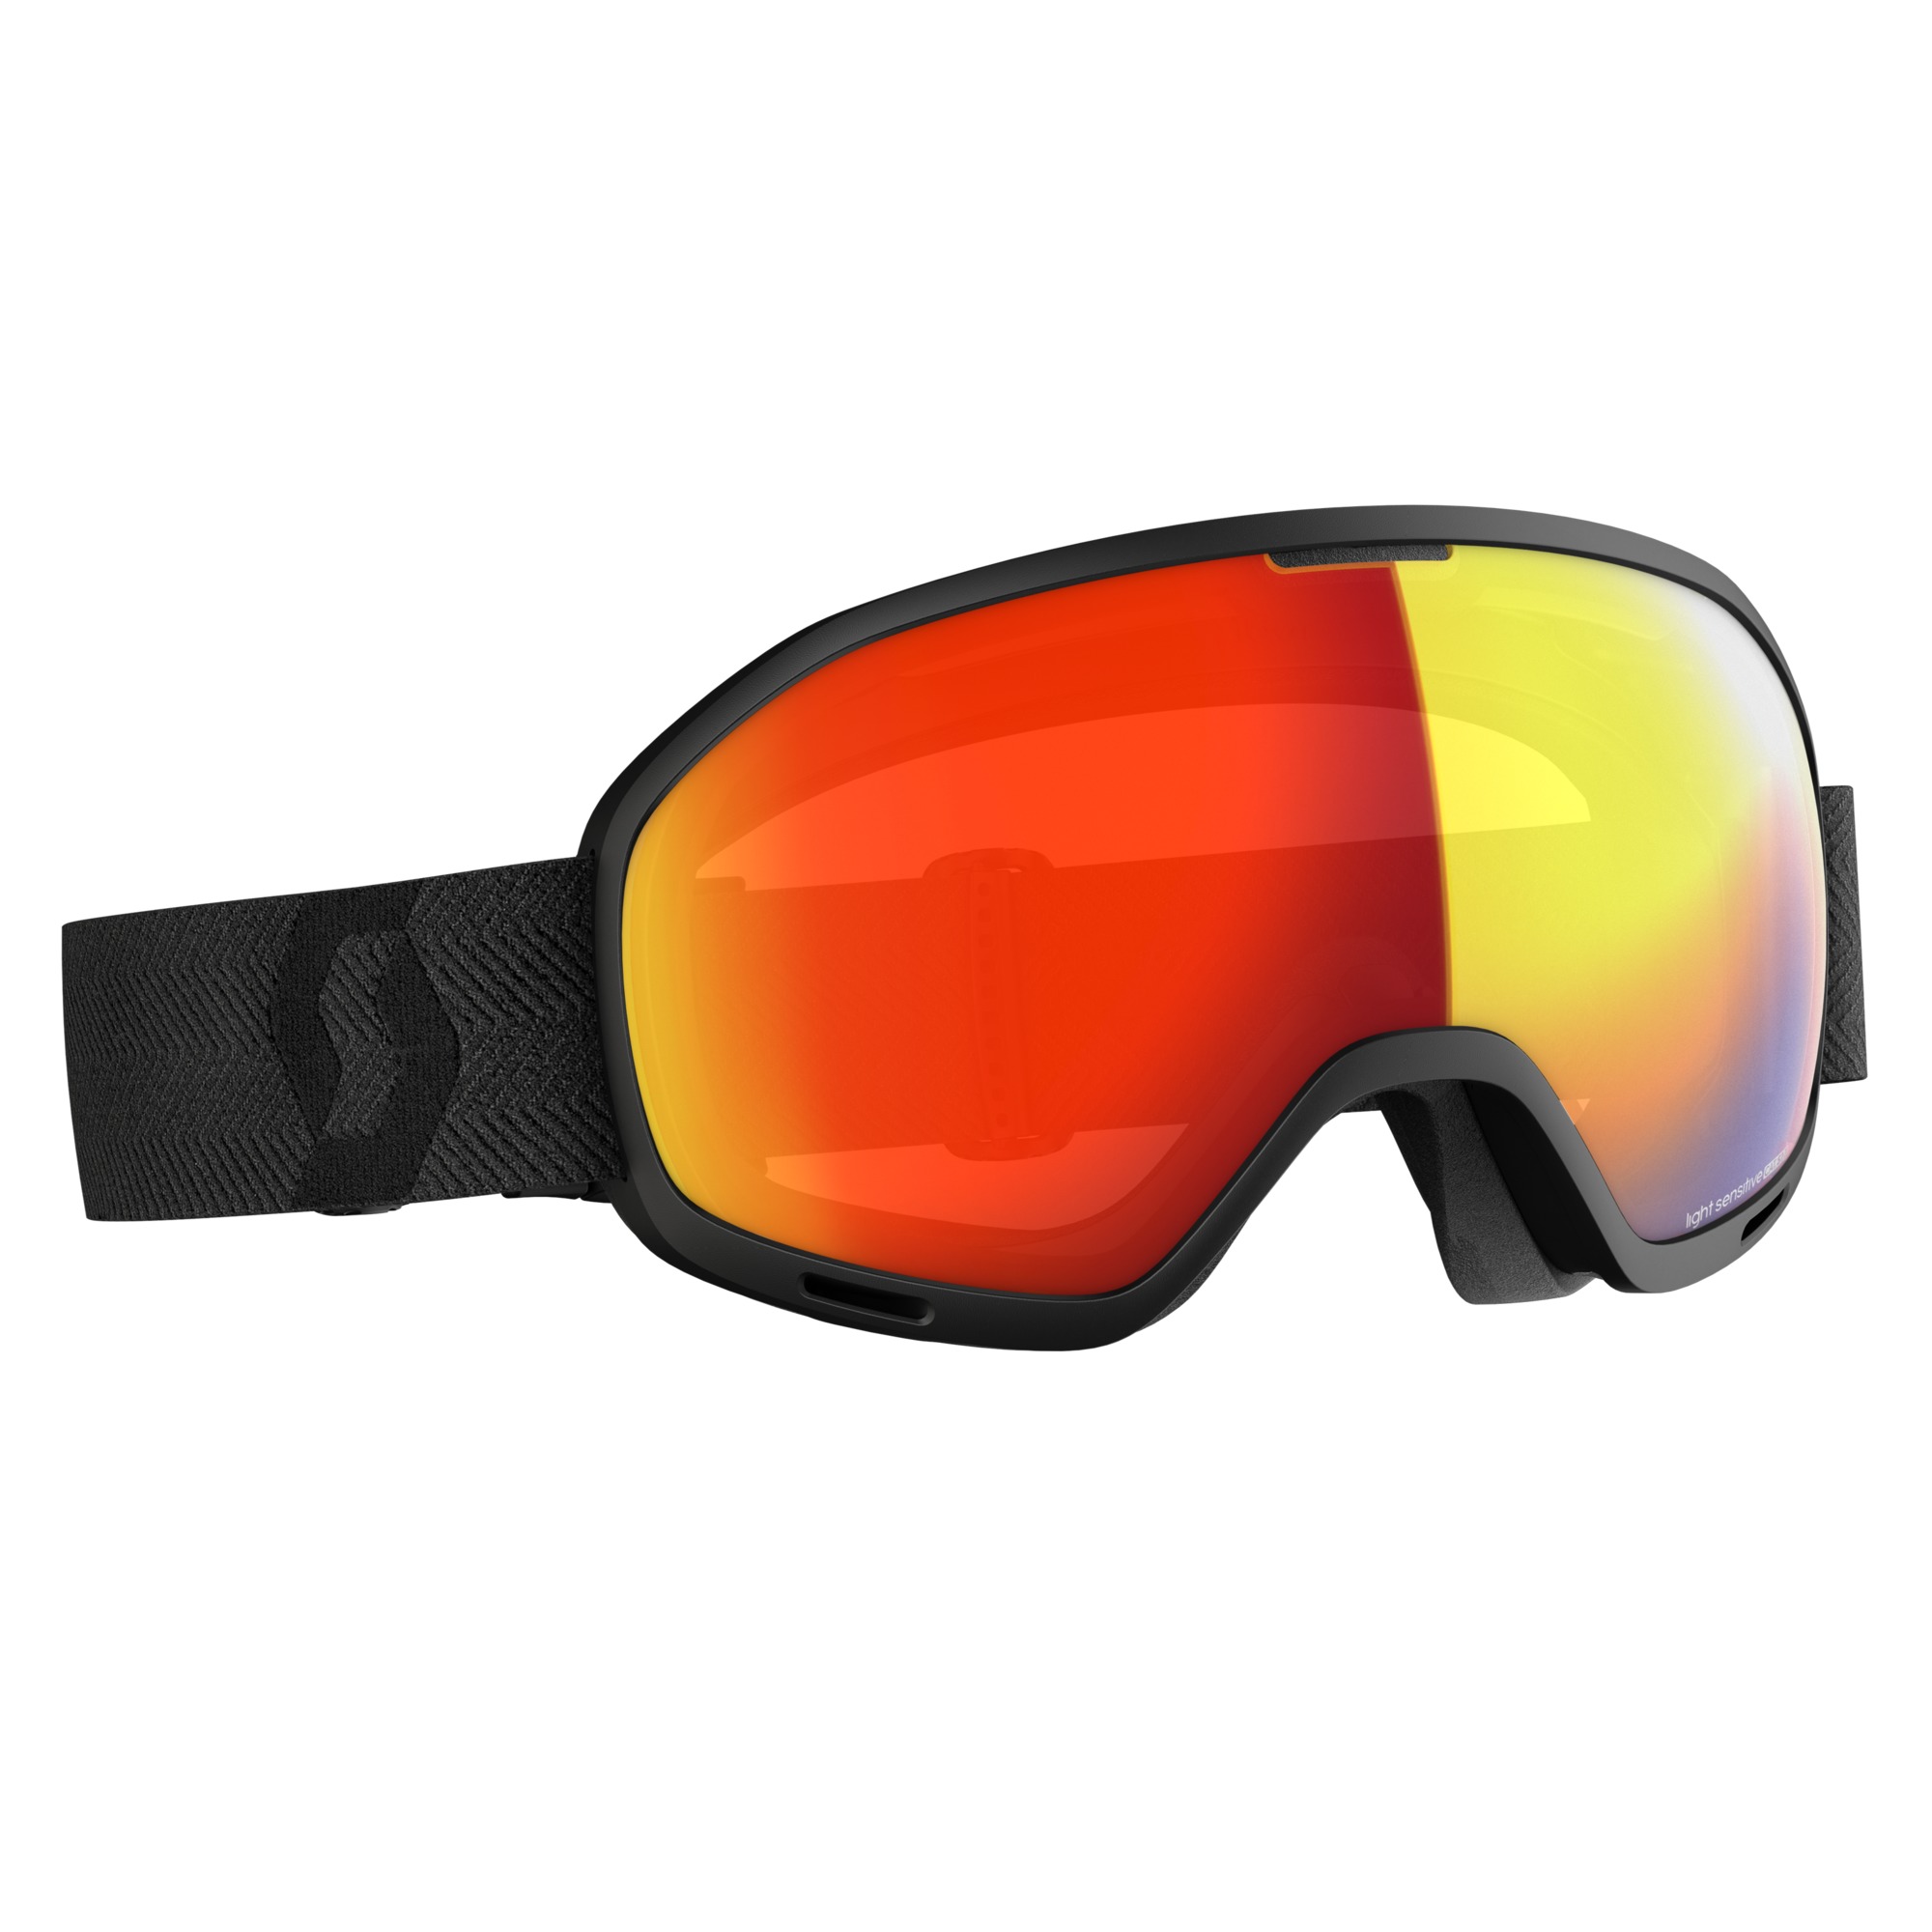 Scott Unlimited 11 OTG Goggles – Light Sensitive – Black/Red Chrome – Cat S2-S3